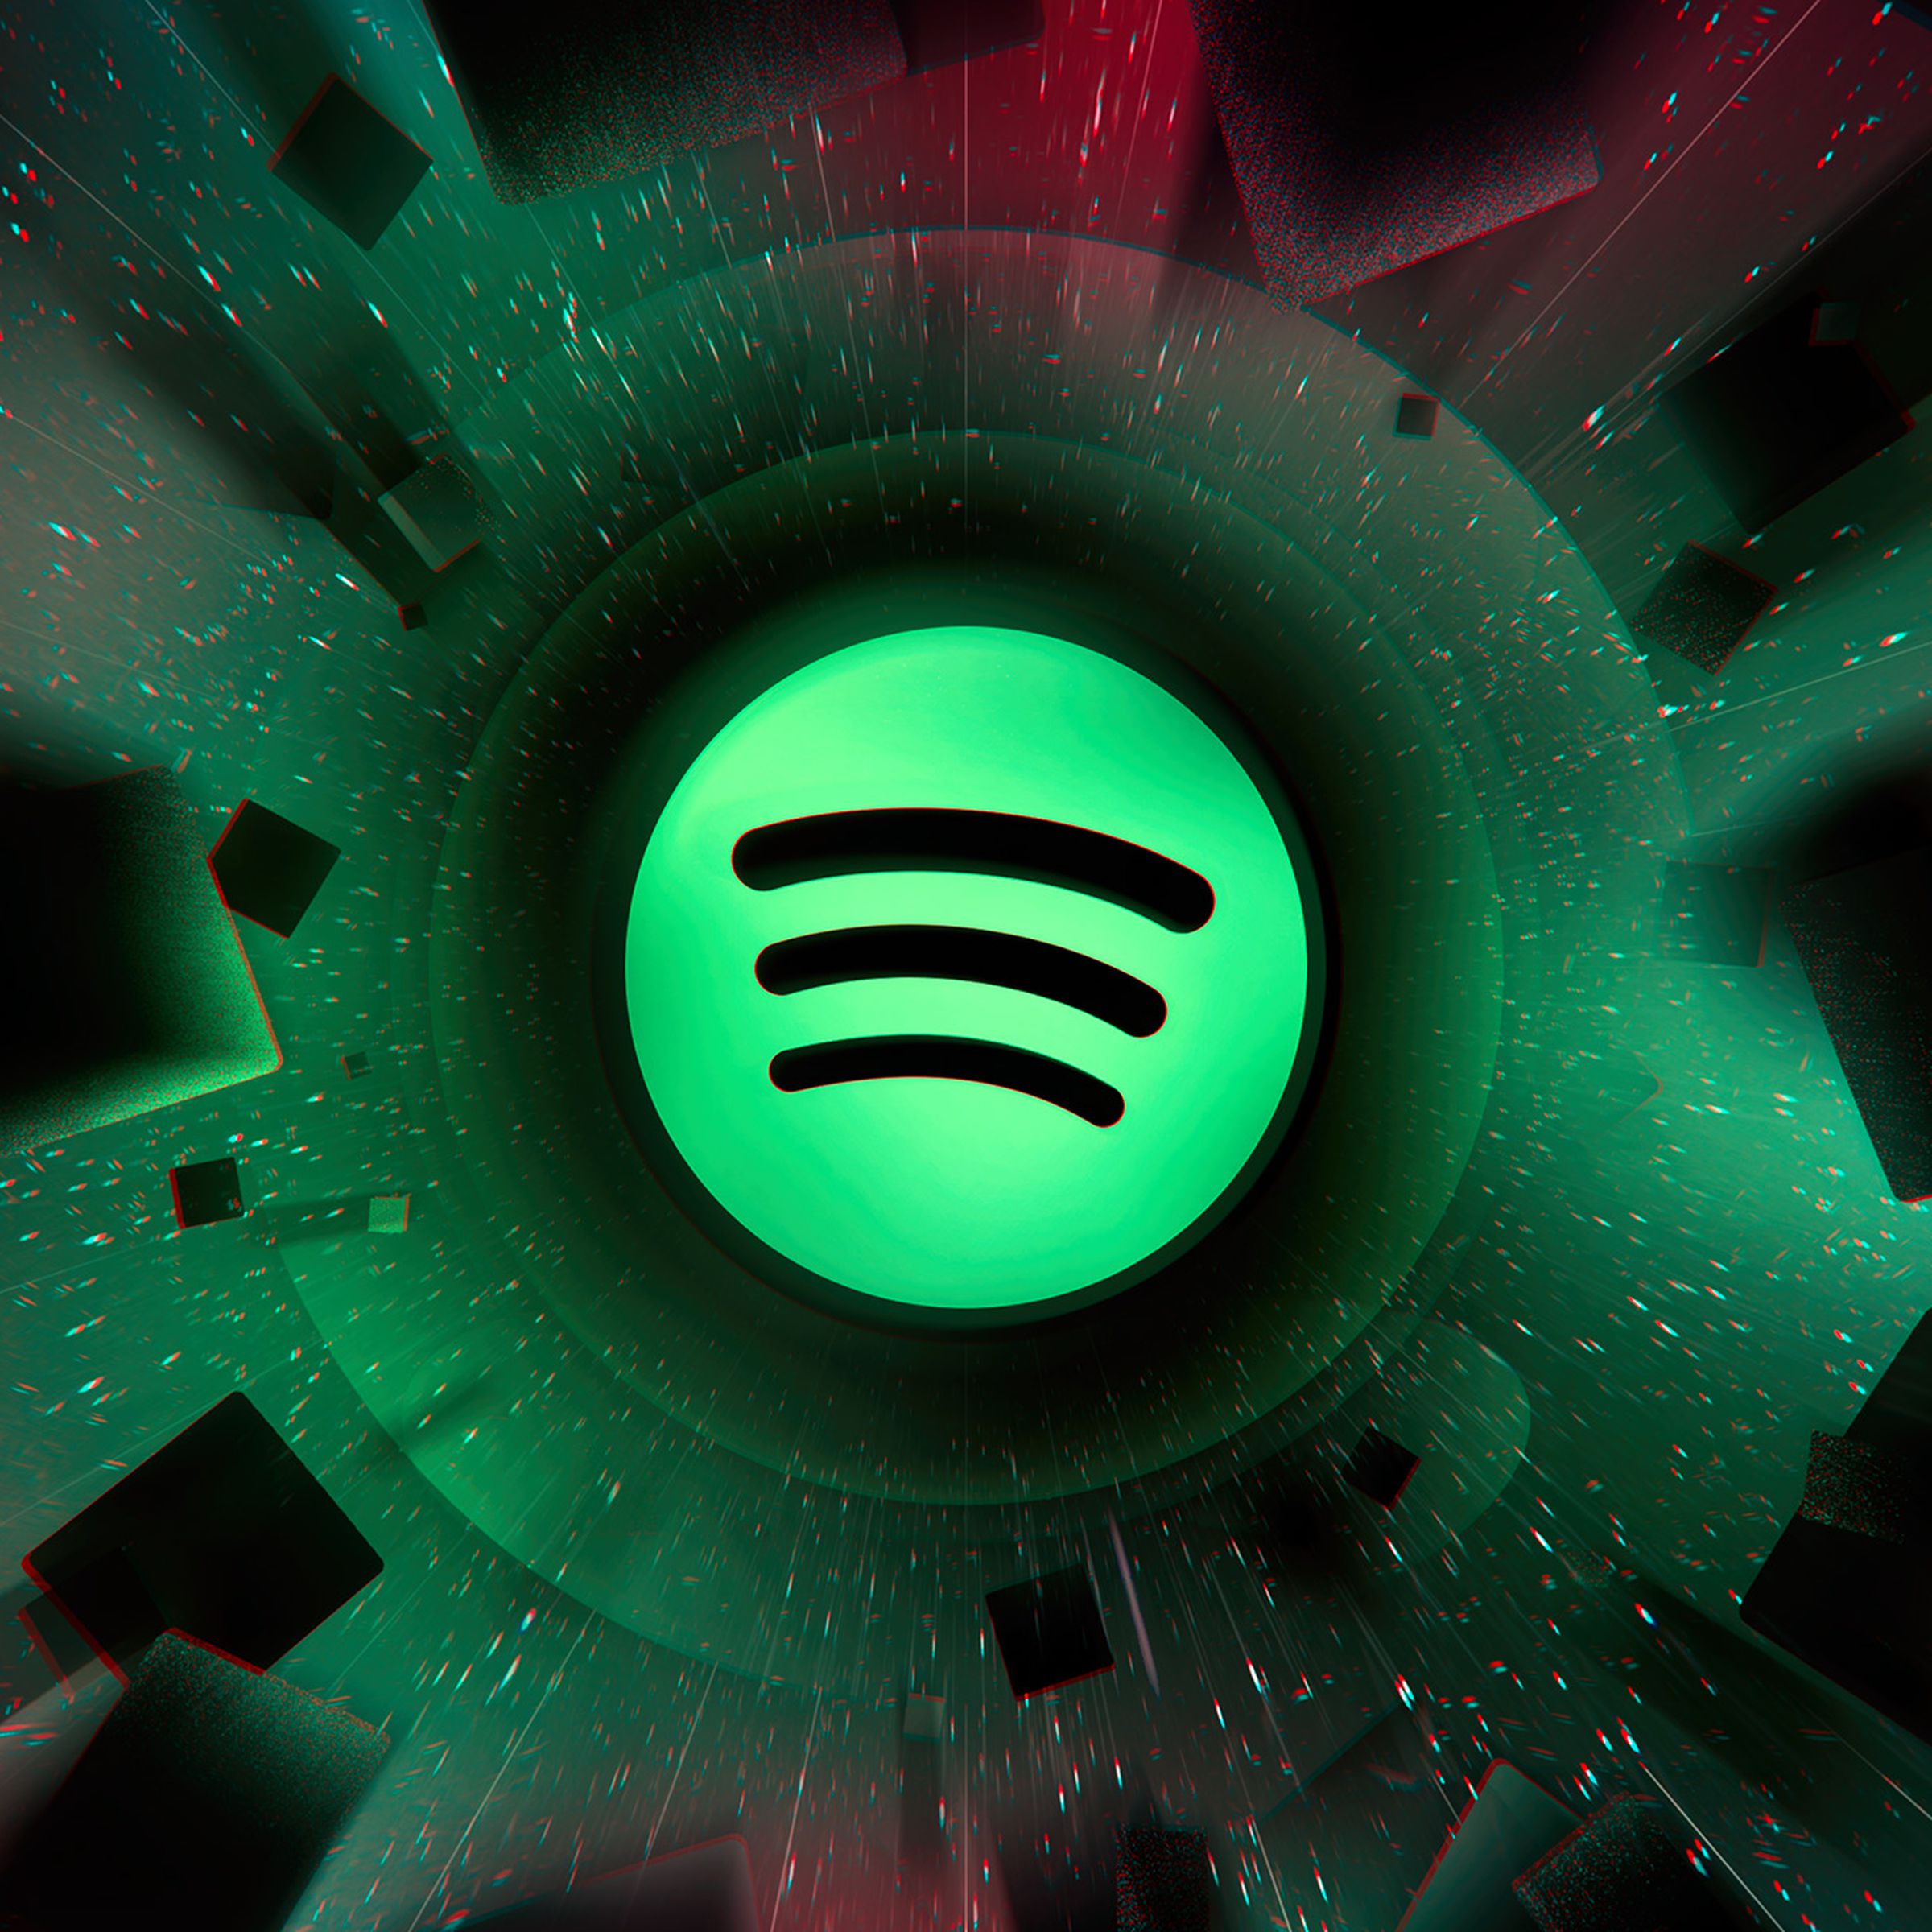 A photo illustration of Spotify’s green circle logo